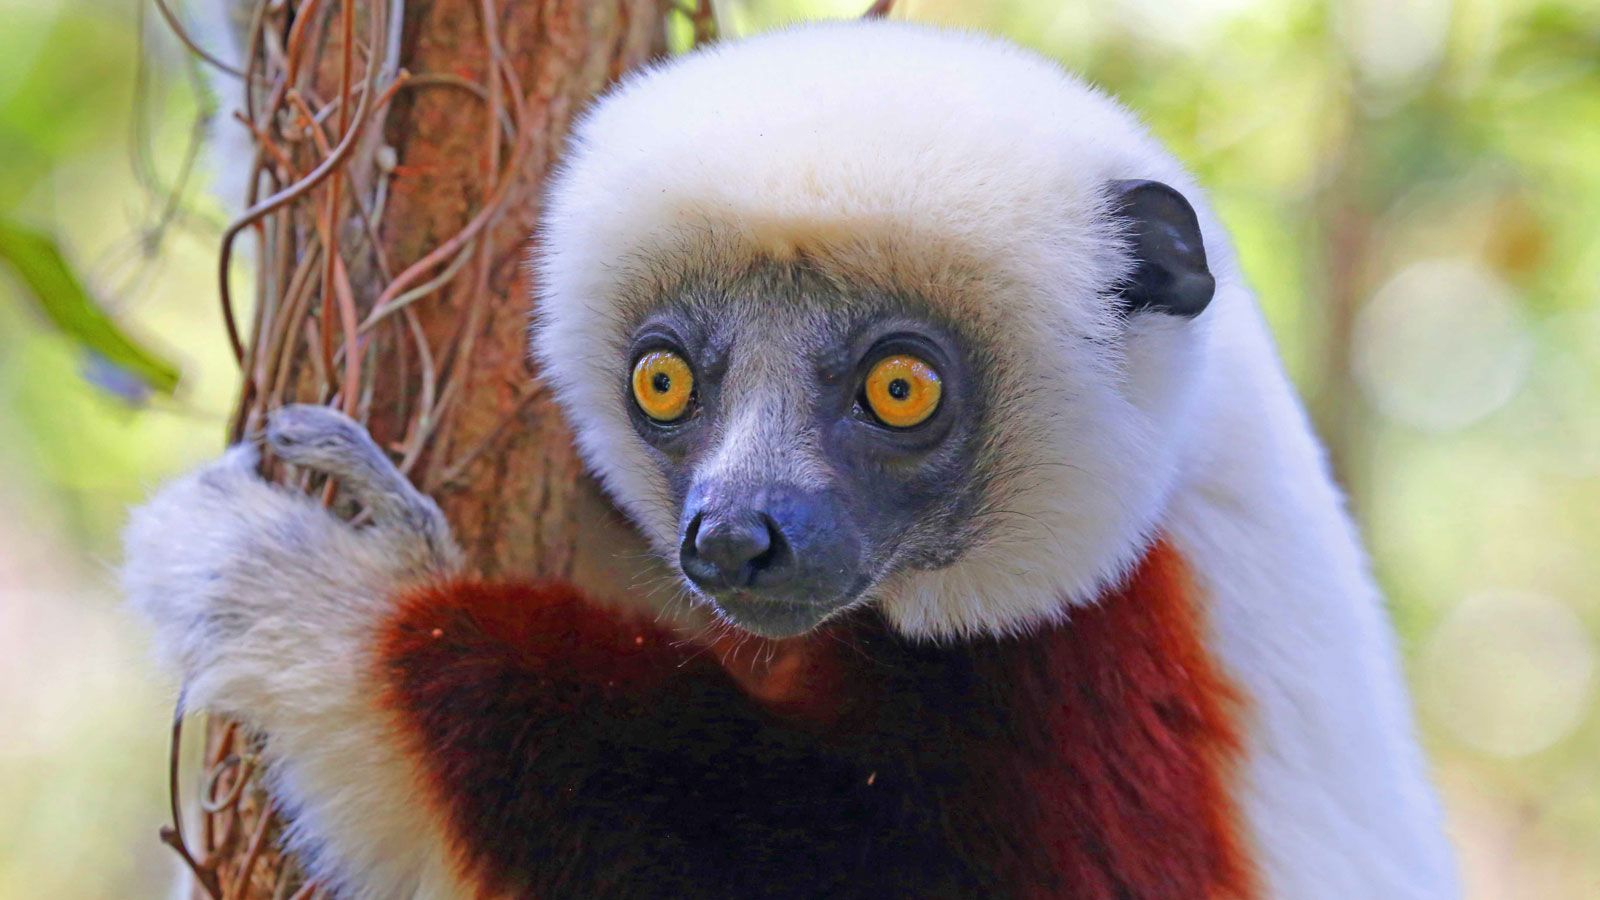 Can Madagascar's endangered lemurs be saved? | CNN